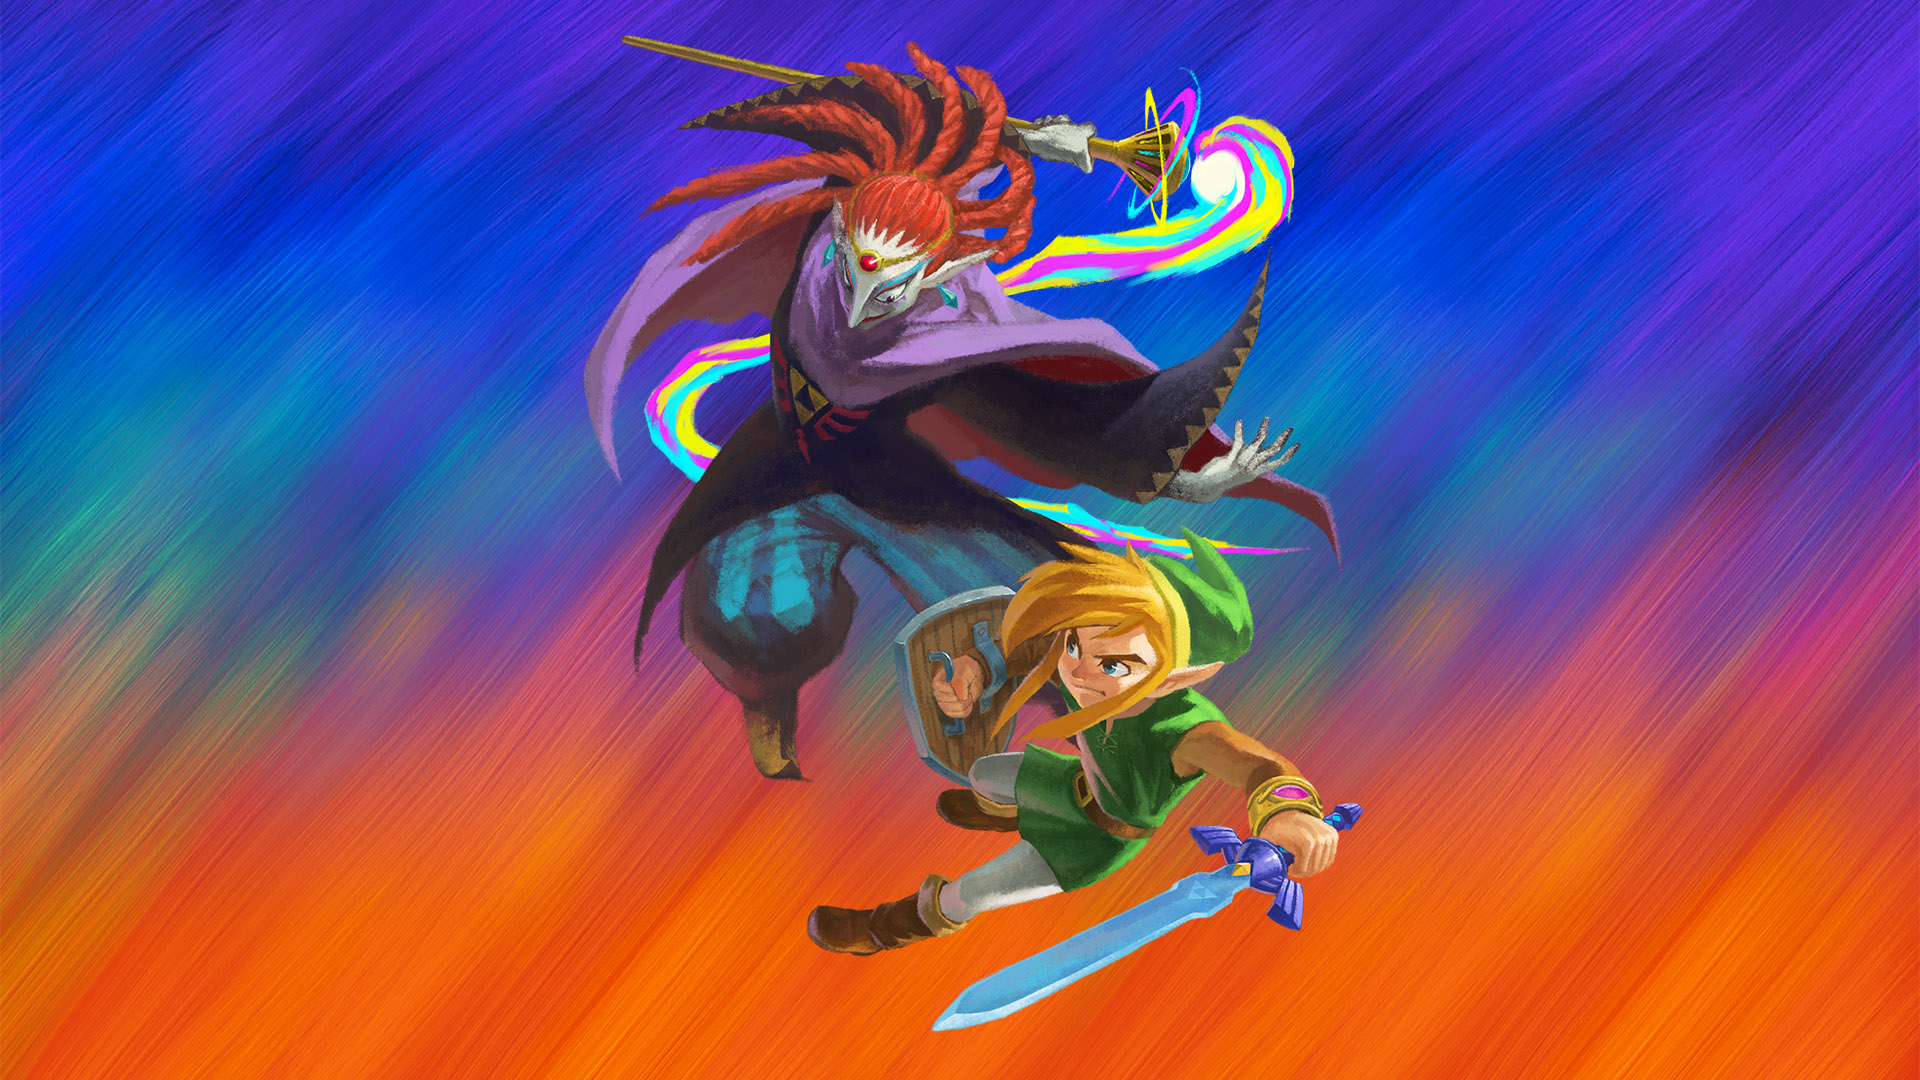 The Legend Of Zelda: A Link Between Worlds HD Wallpaper and Background